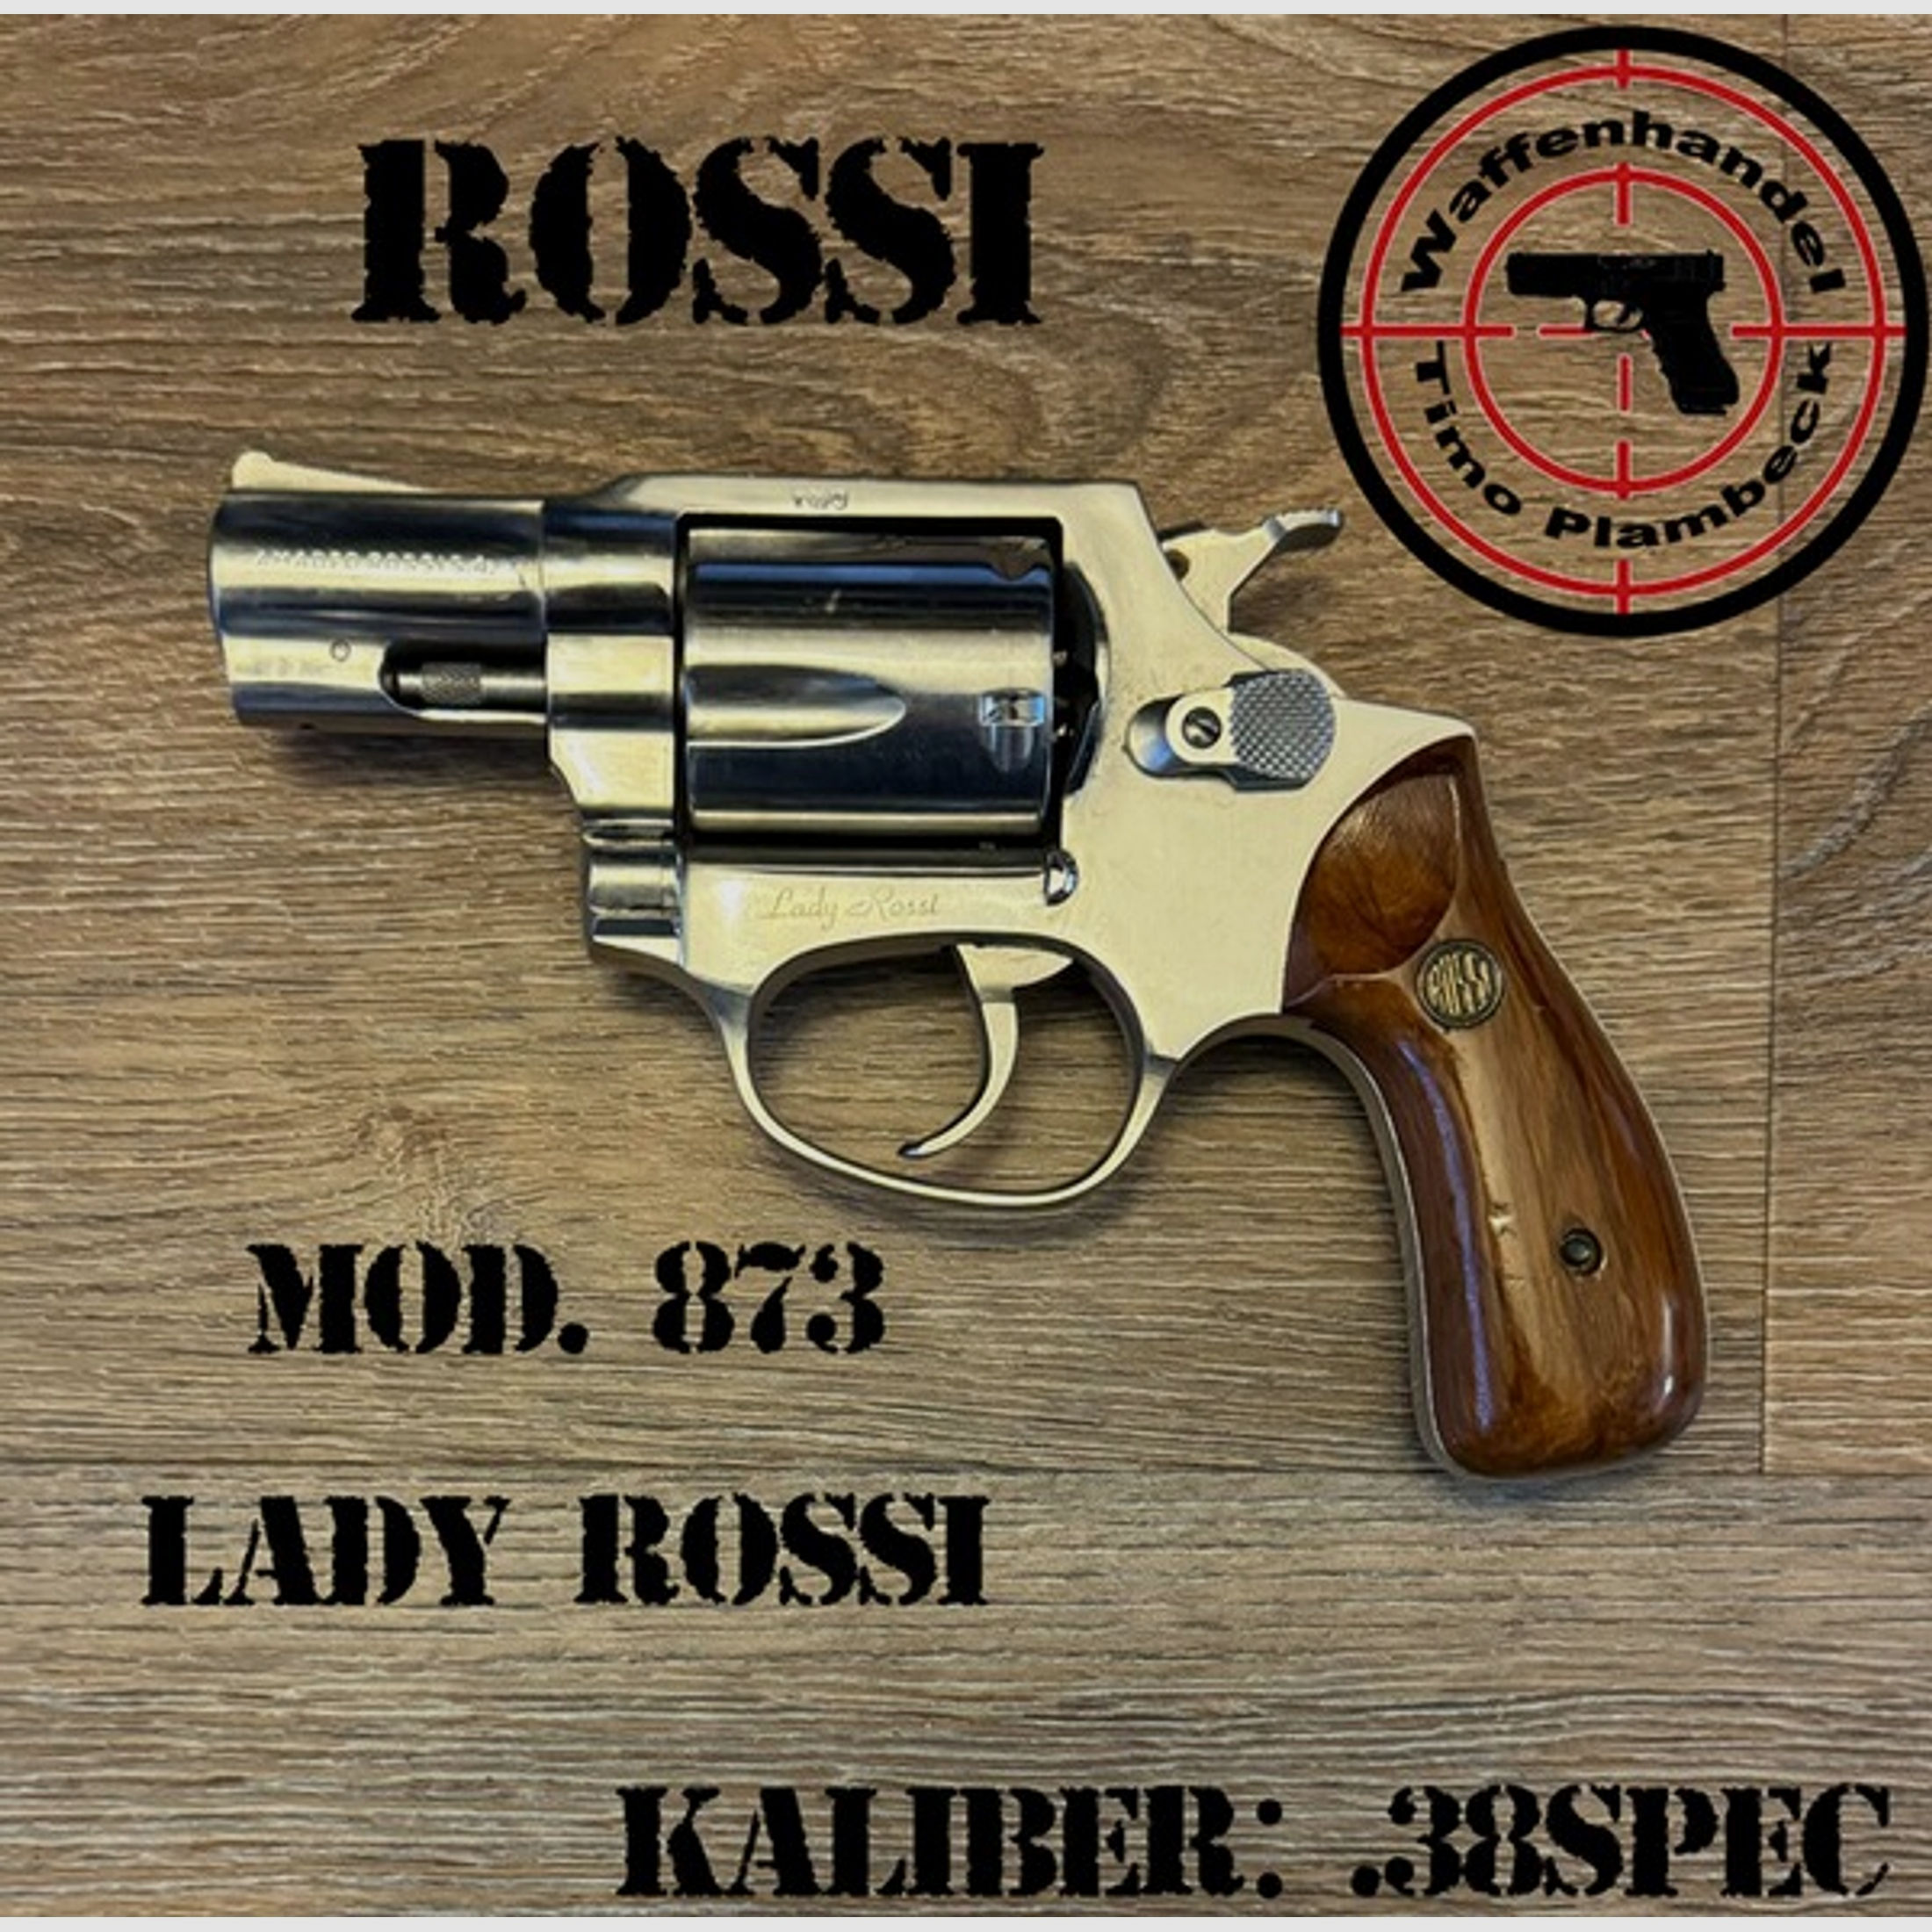 Revolver  ROSSI  Mod. 873 Lady Rossi  im Kaliber .38Spec